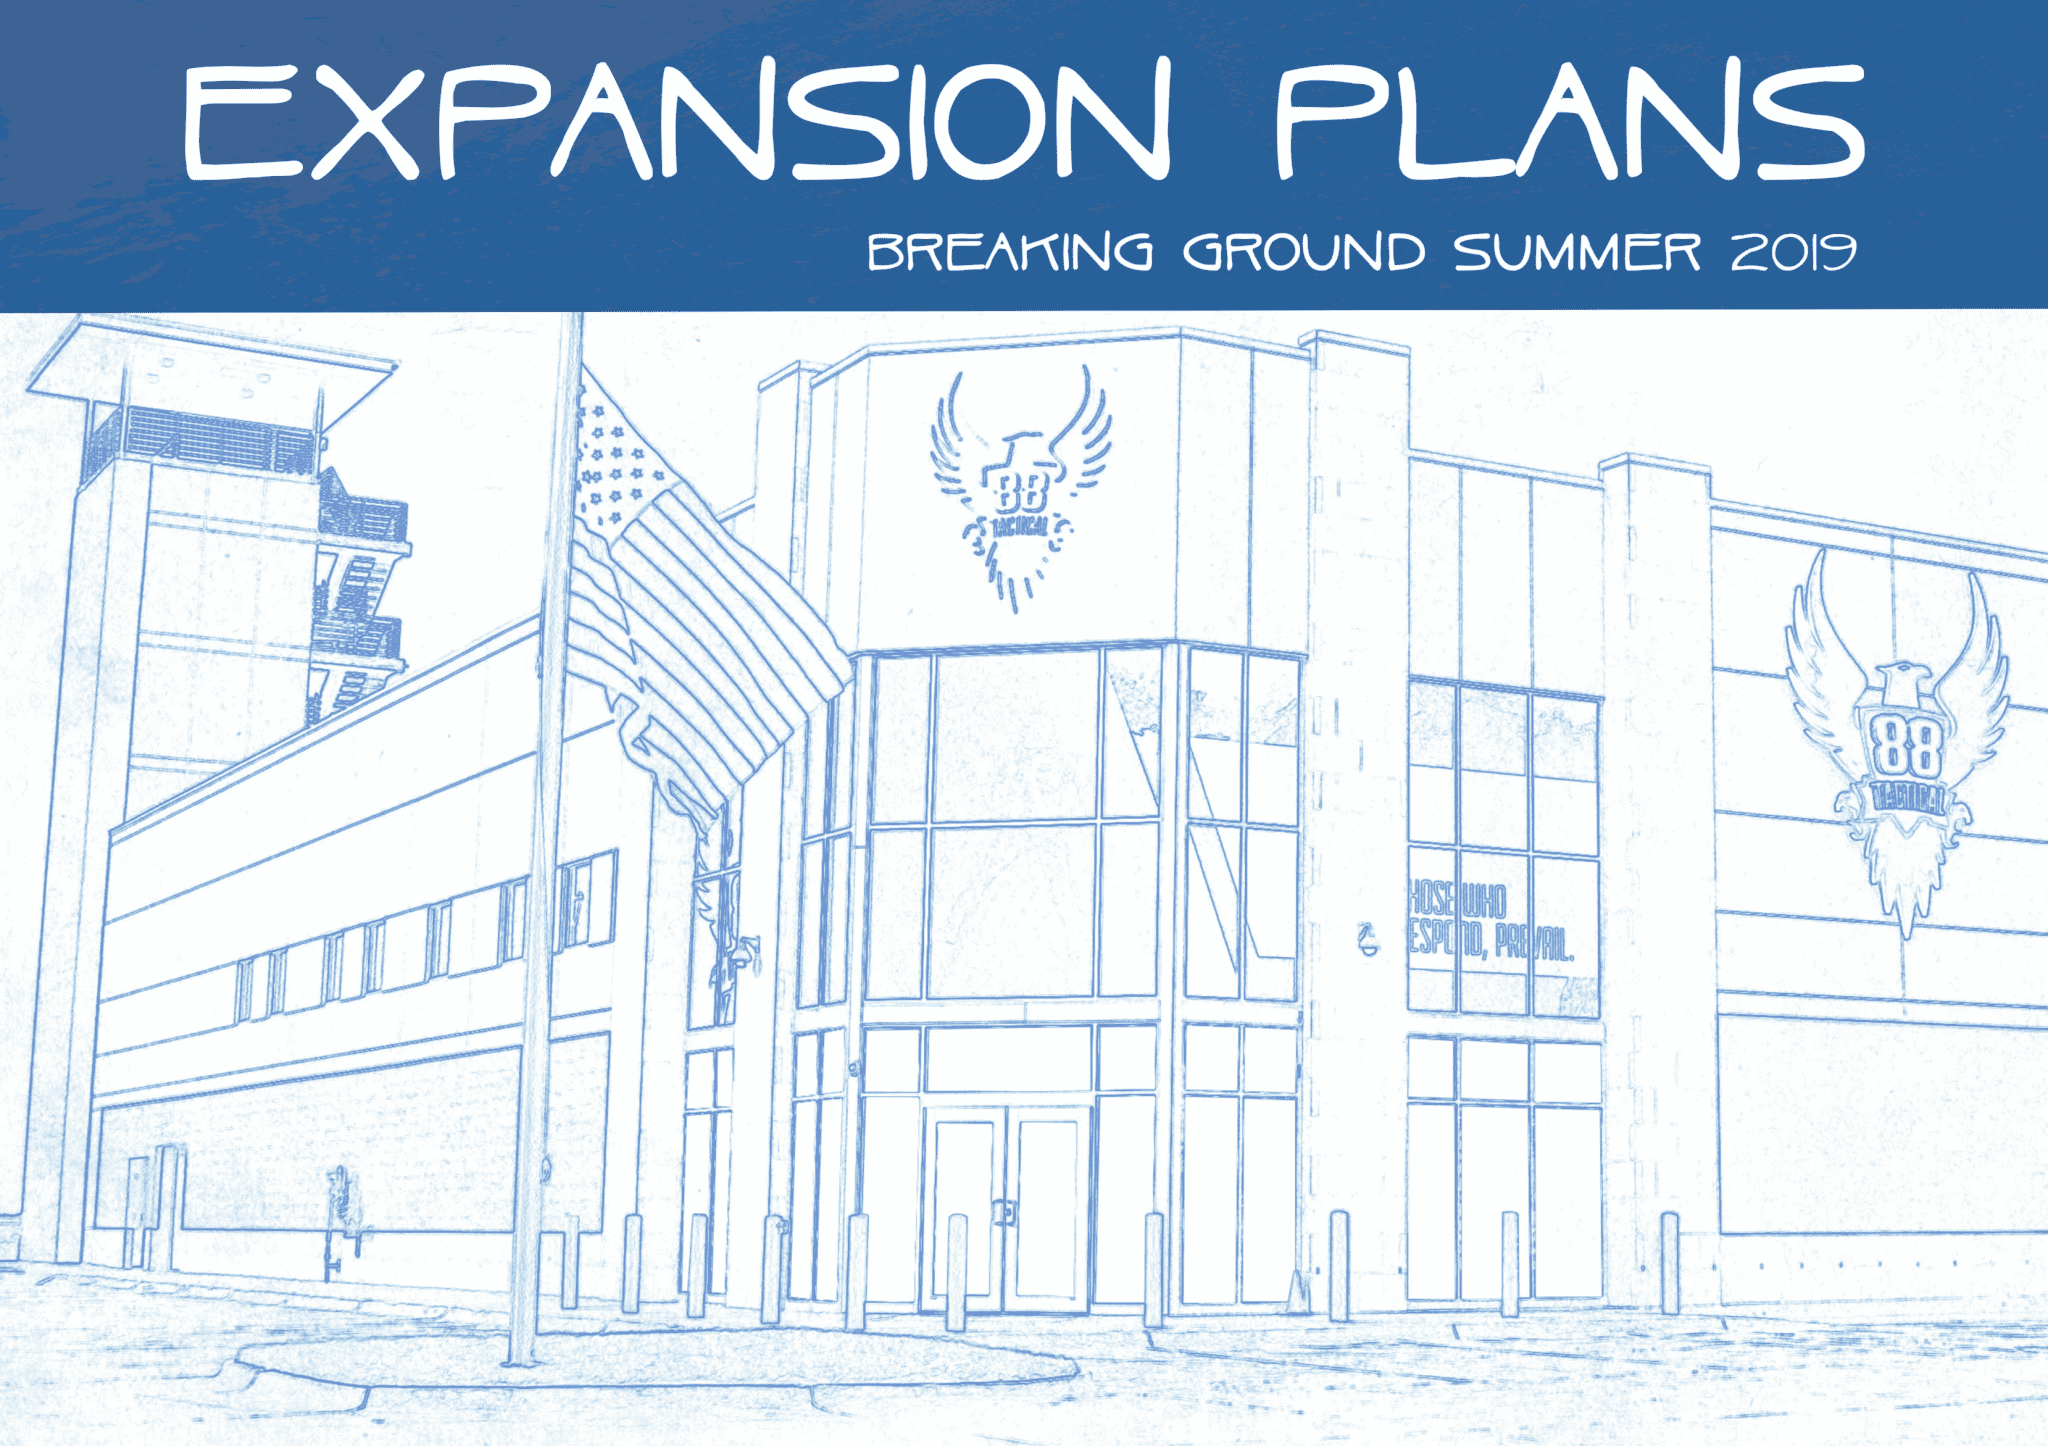 Expansion Plans: Breaking Ground Summer 2019